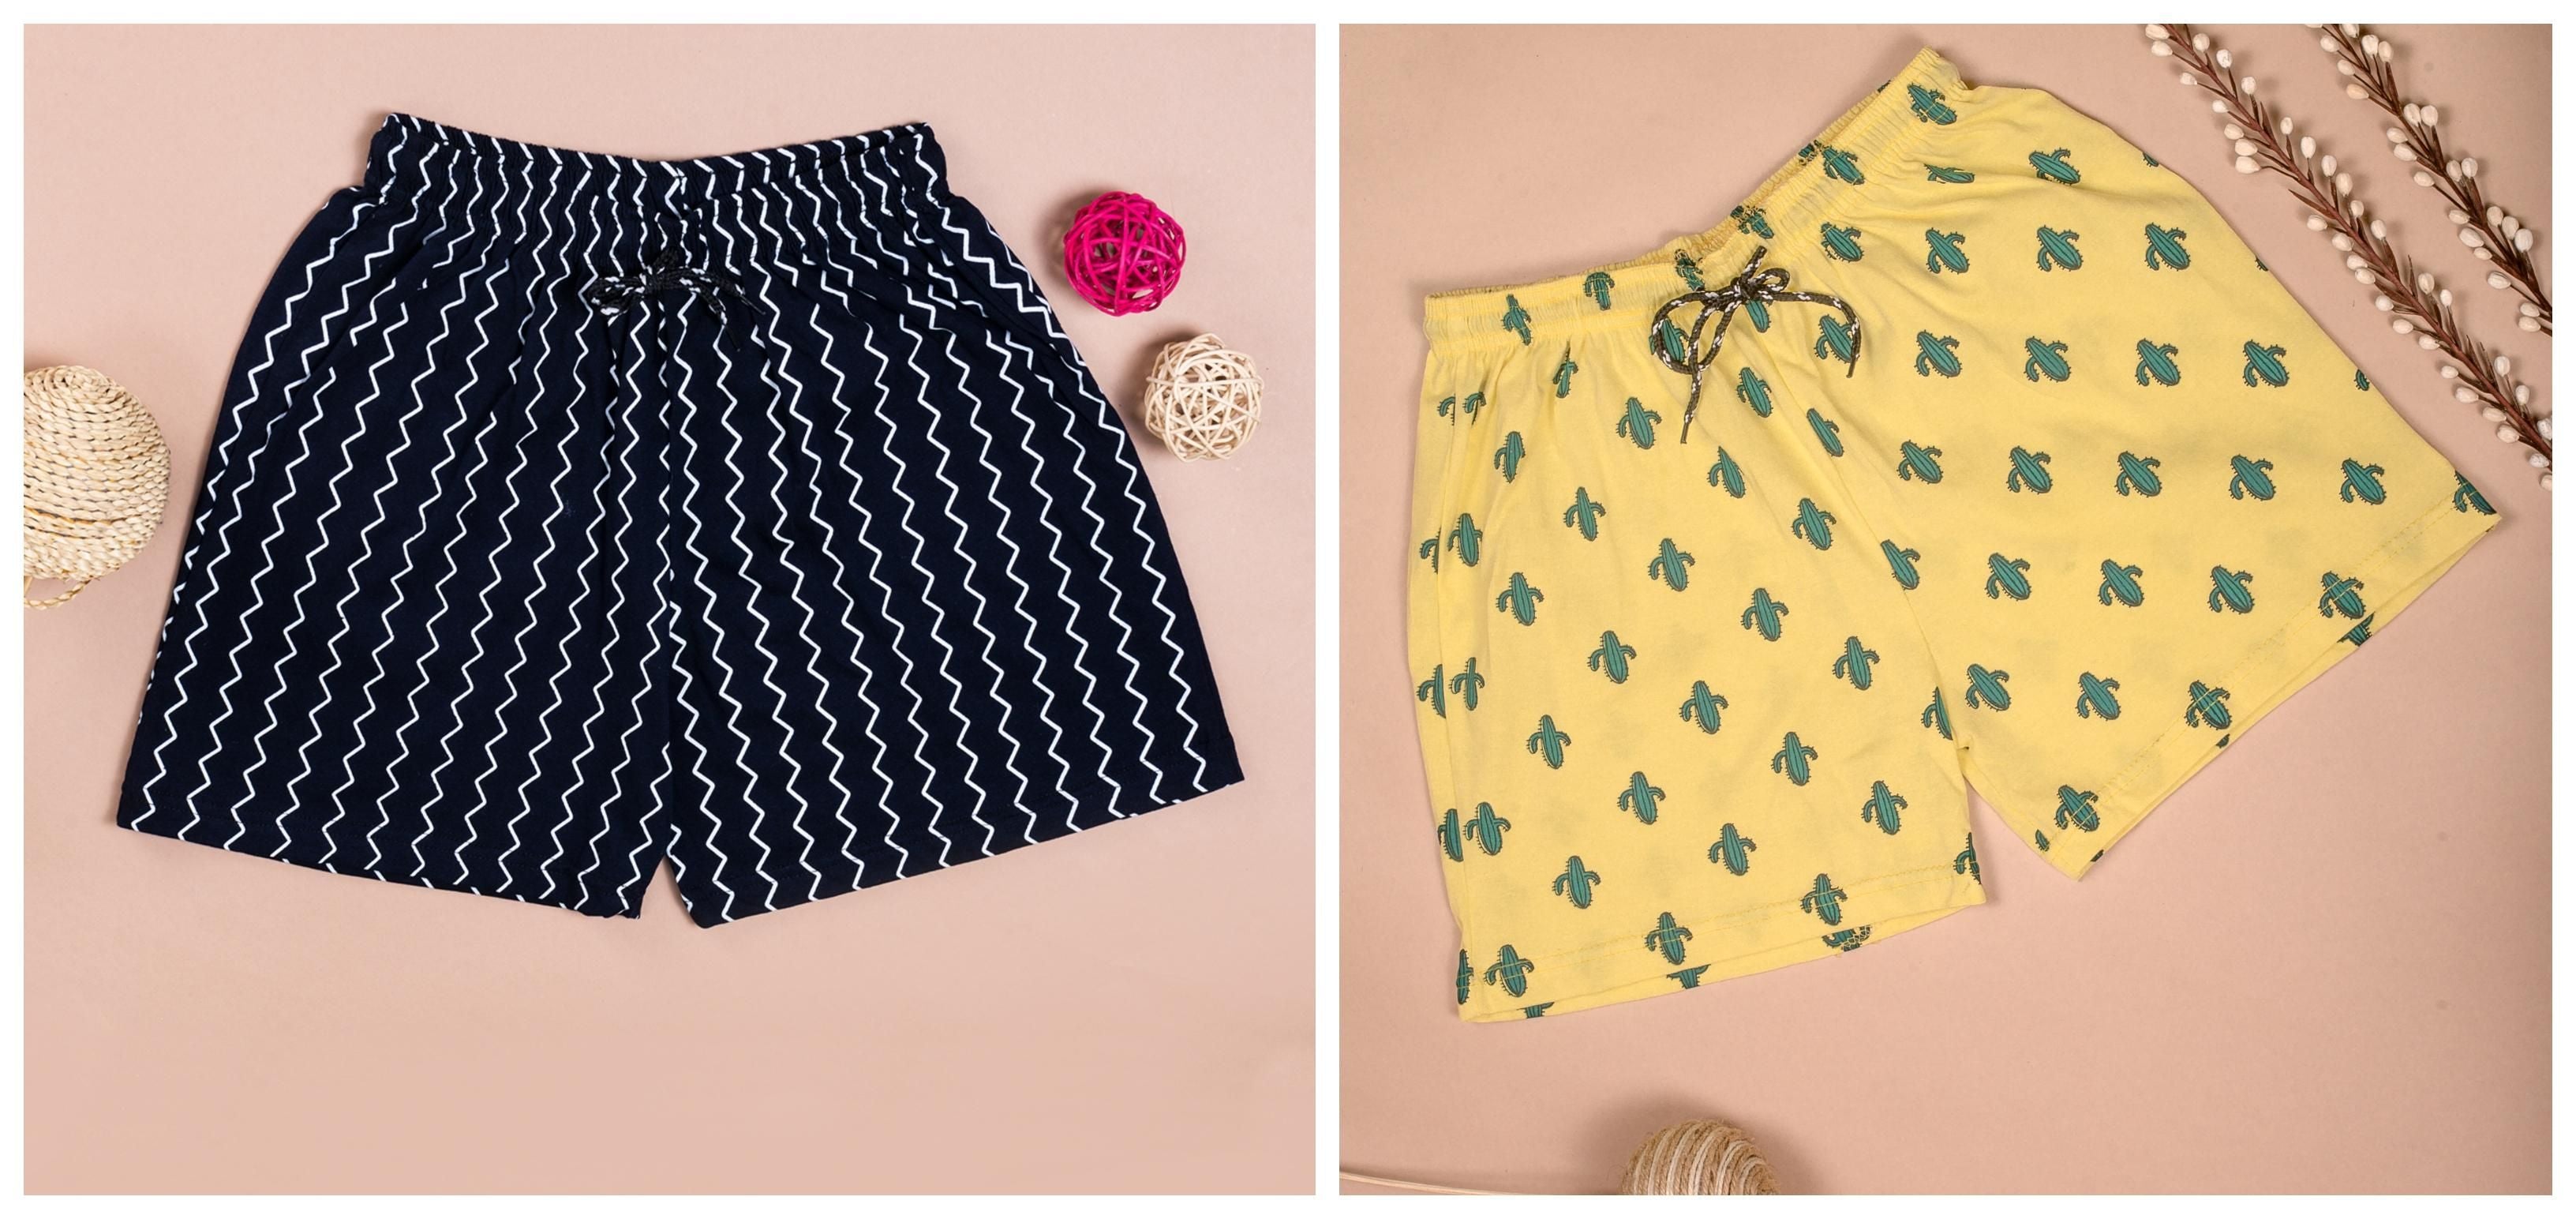 Women's Cotton Bluemaze and Cactus Print Shorts Buy 1 Get 1 Free